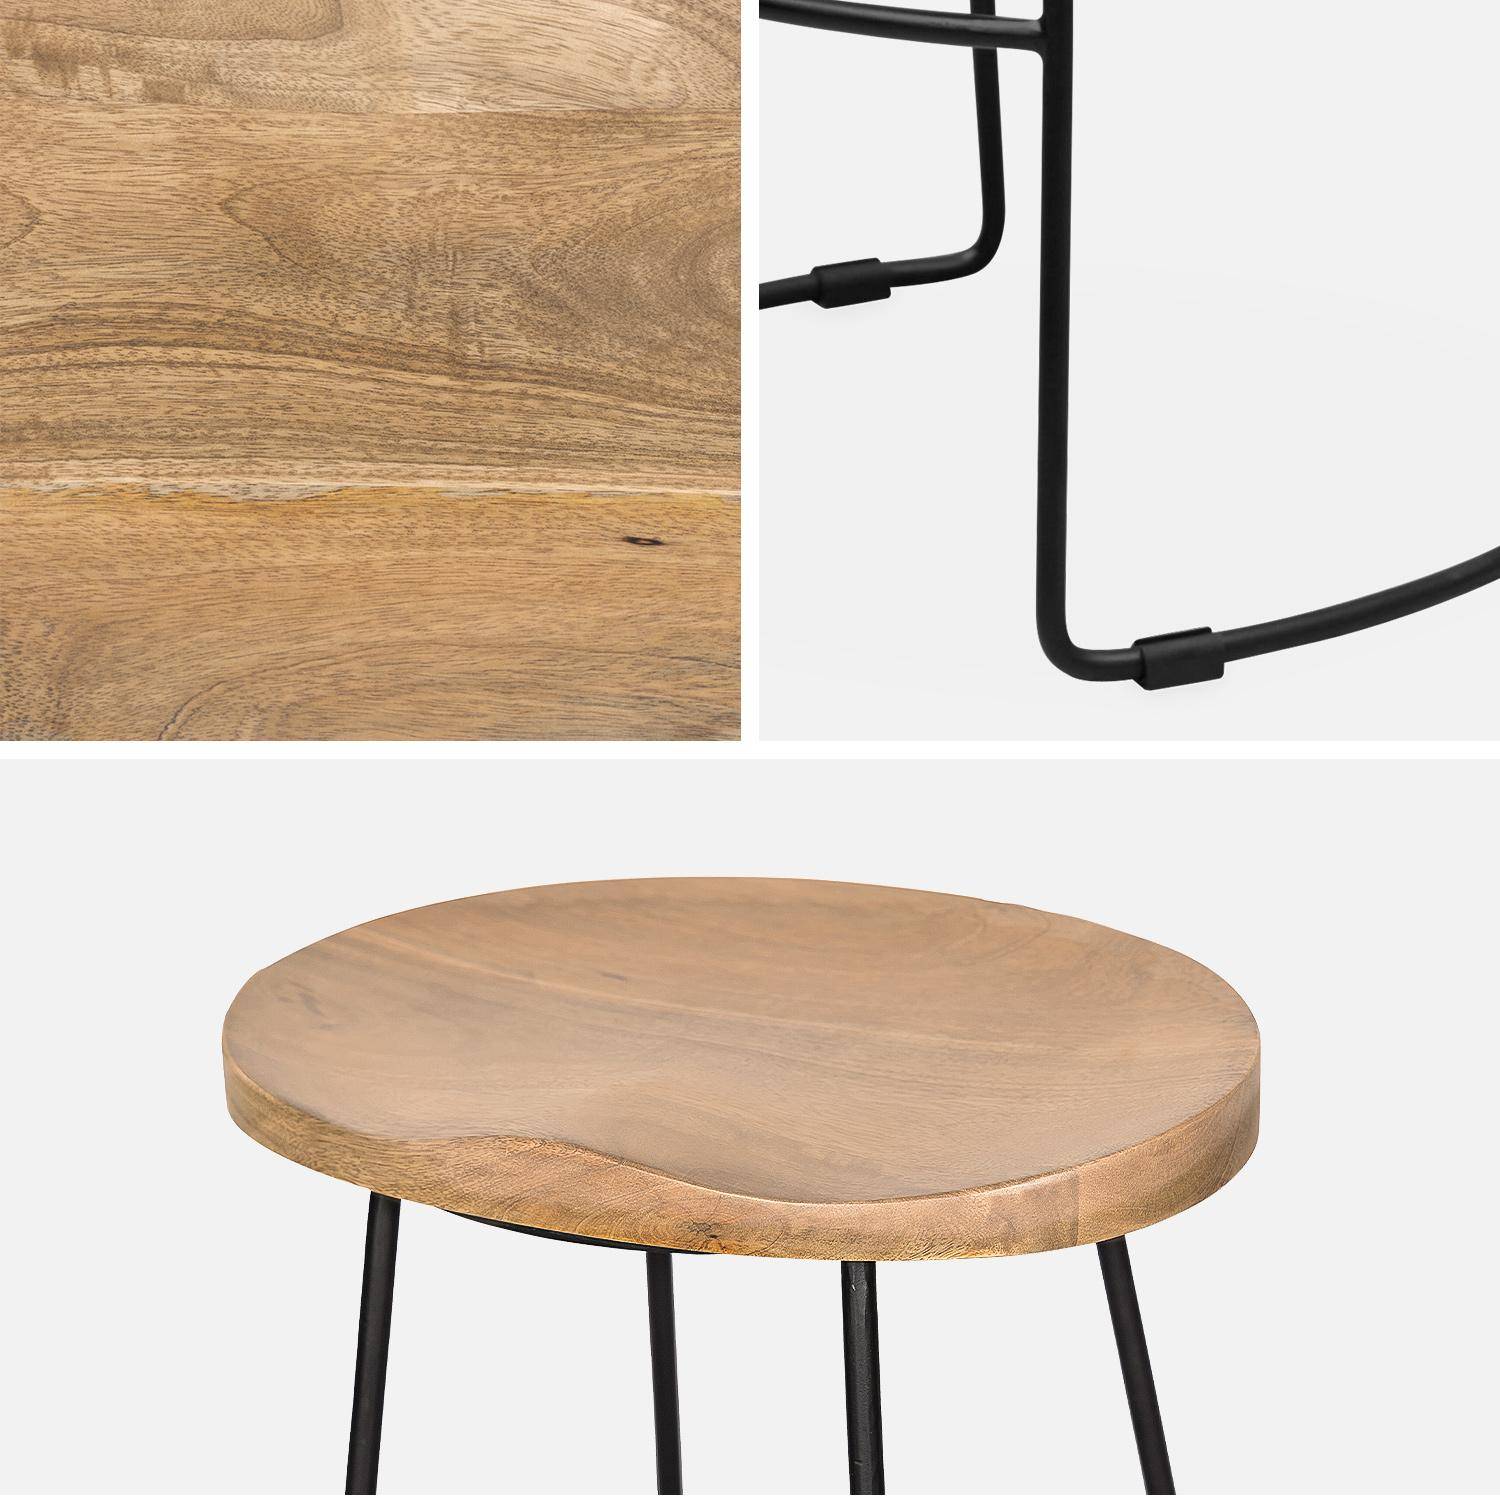 Set of 4 industrial metal and wooden bar stools, 47x40x75cm, Jaya, Mango wood seat, black metal legs Photo7